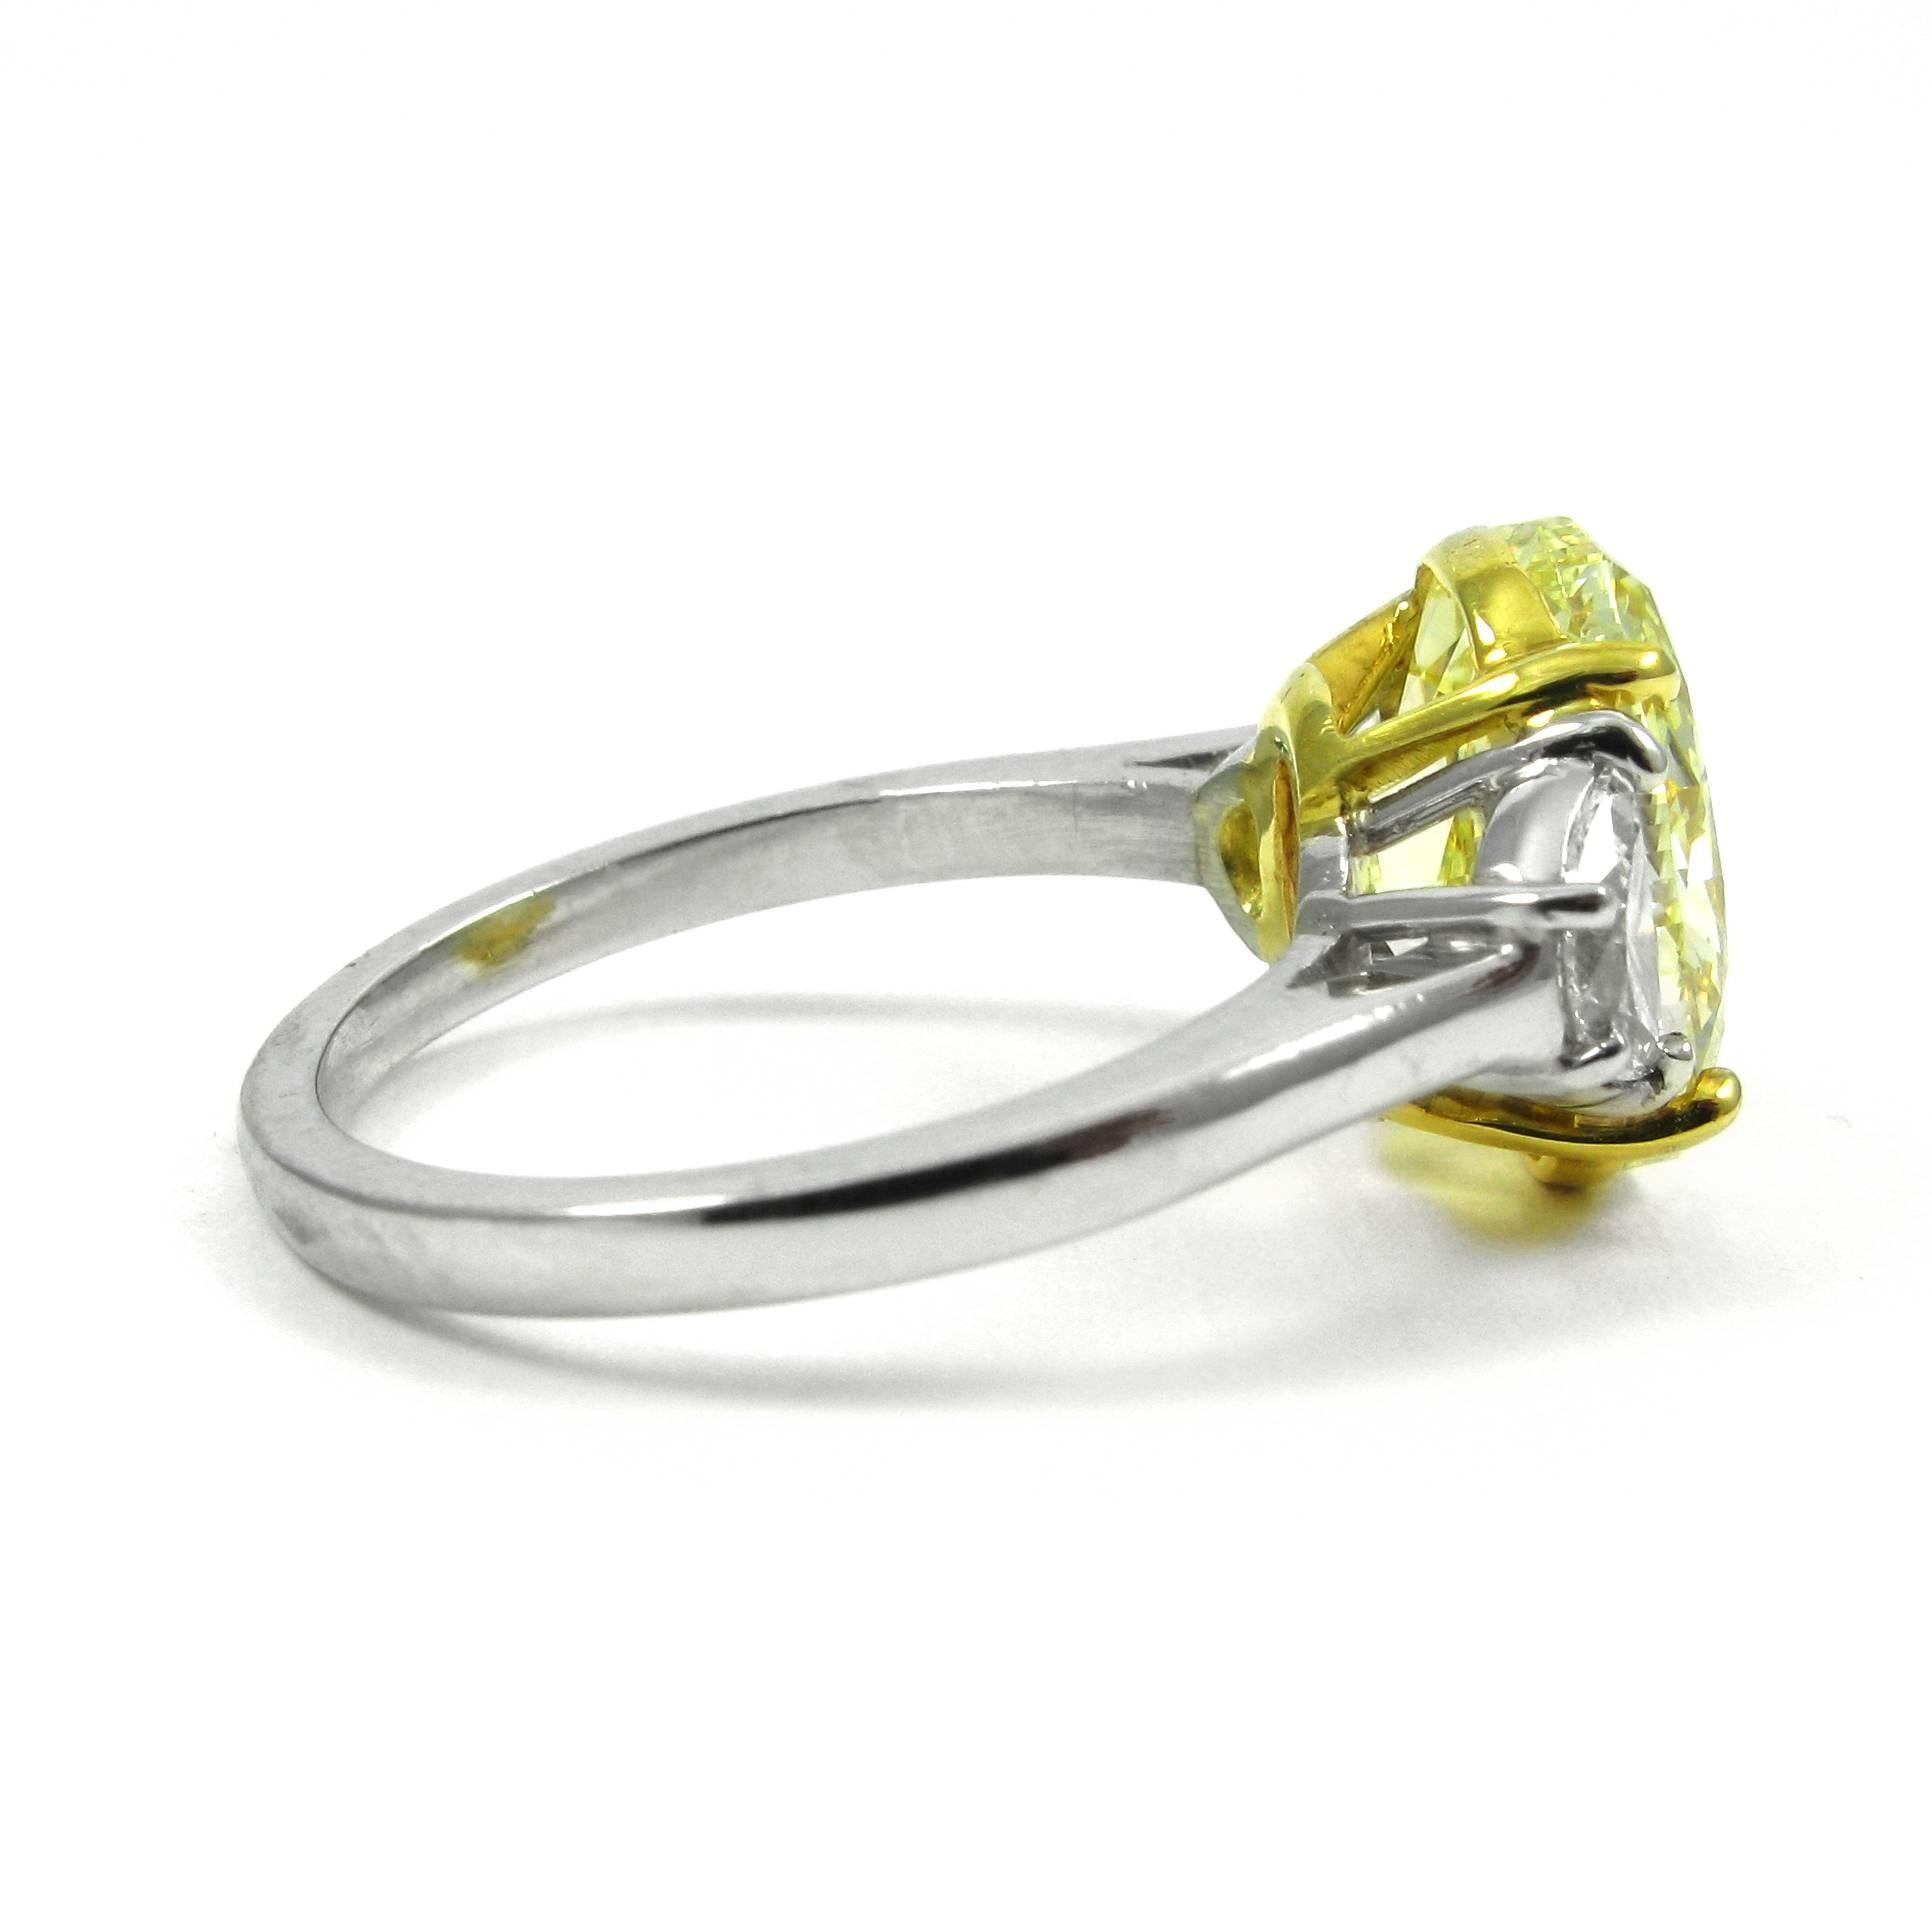 Women's or Men's Stunning GIA Certified 4.61 Carat Fancy Intense Yellow Oval Diamond Ring